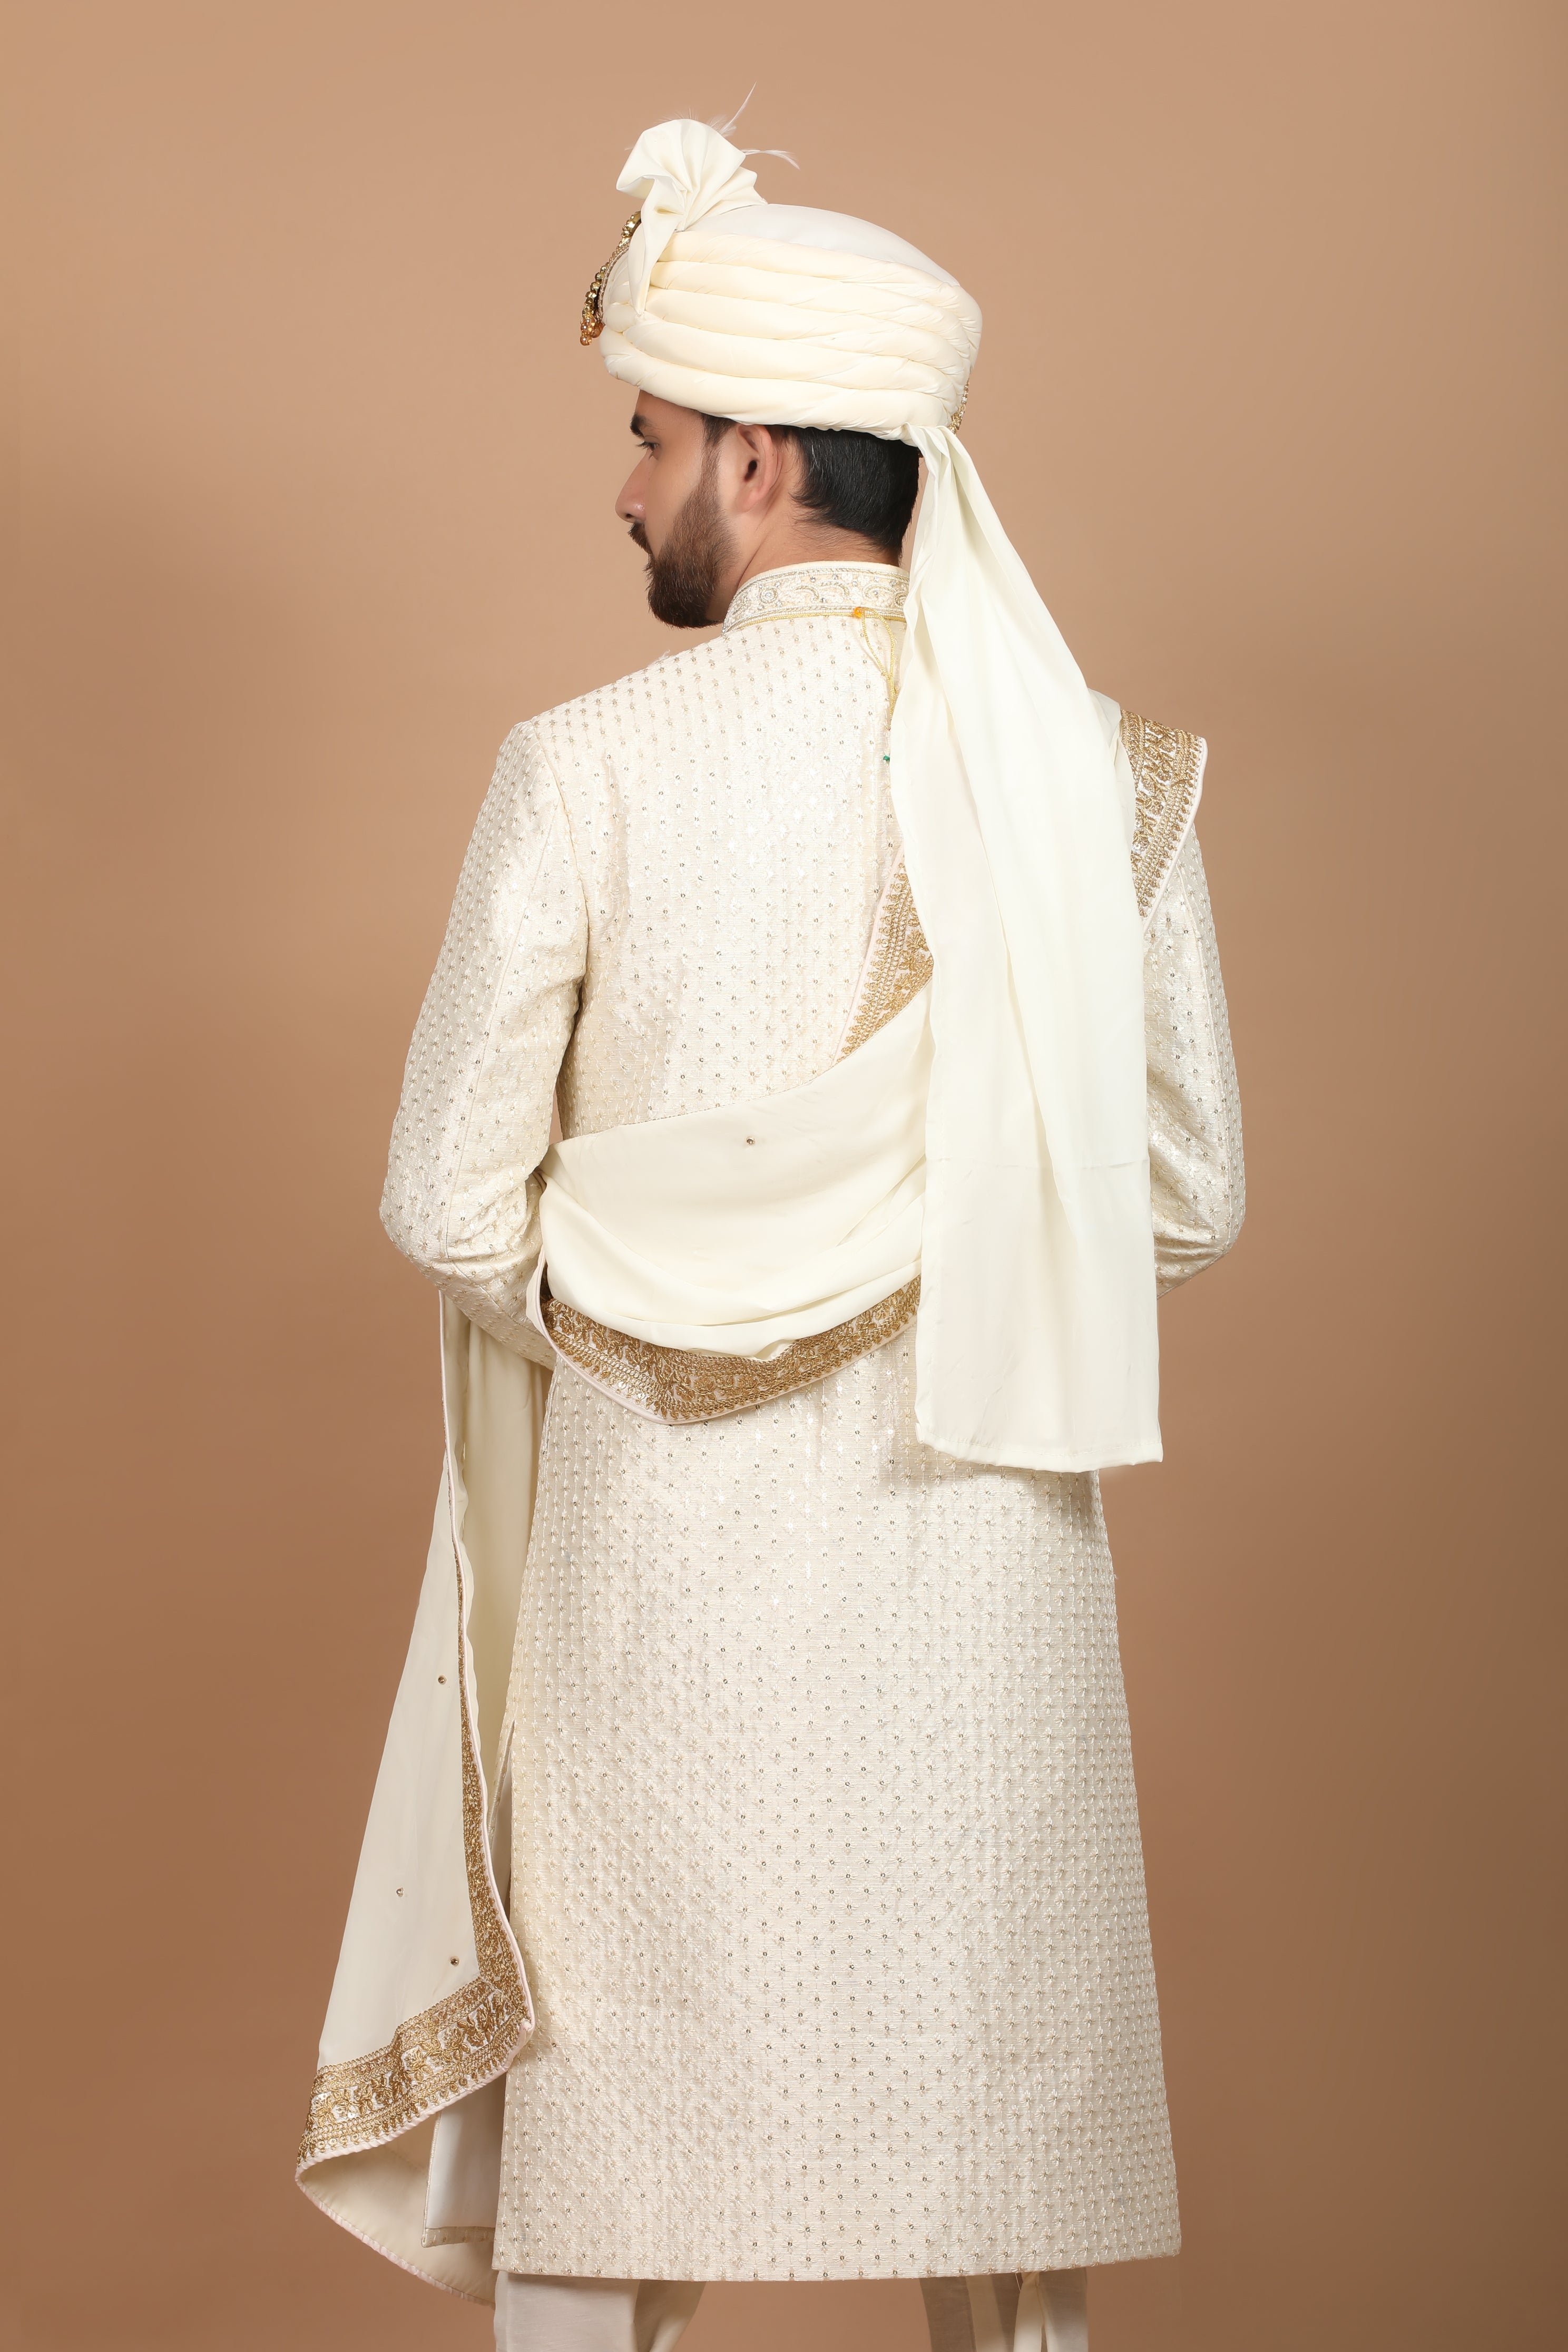 Feel Elegant in the Luxurious Rajwada White Silk Sherwani